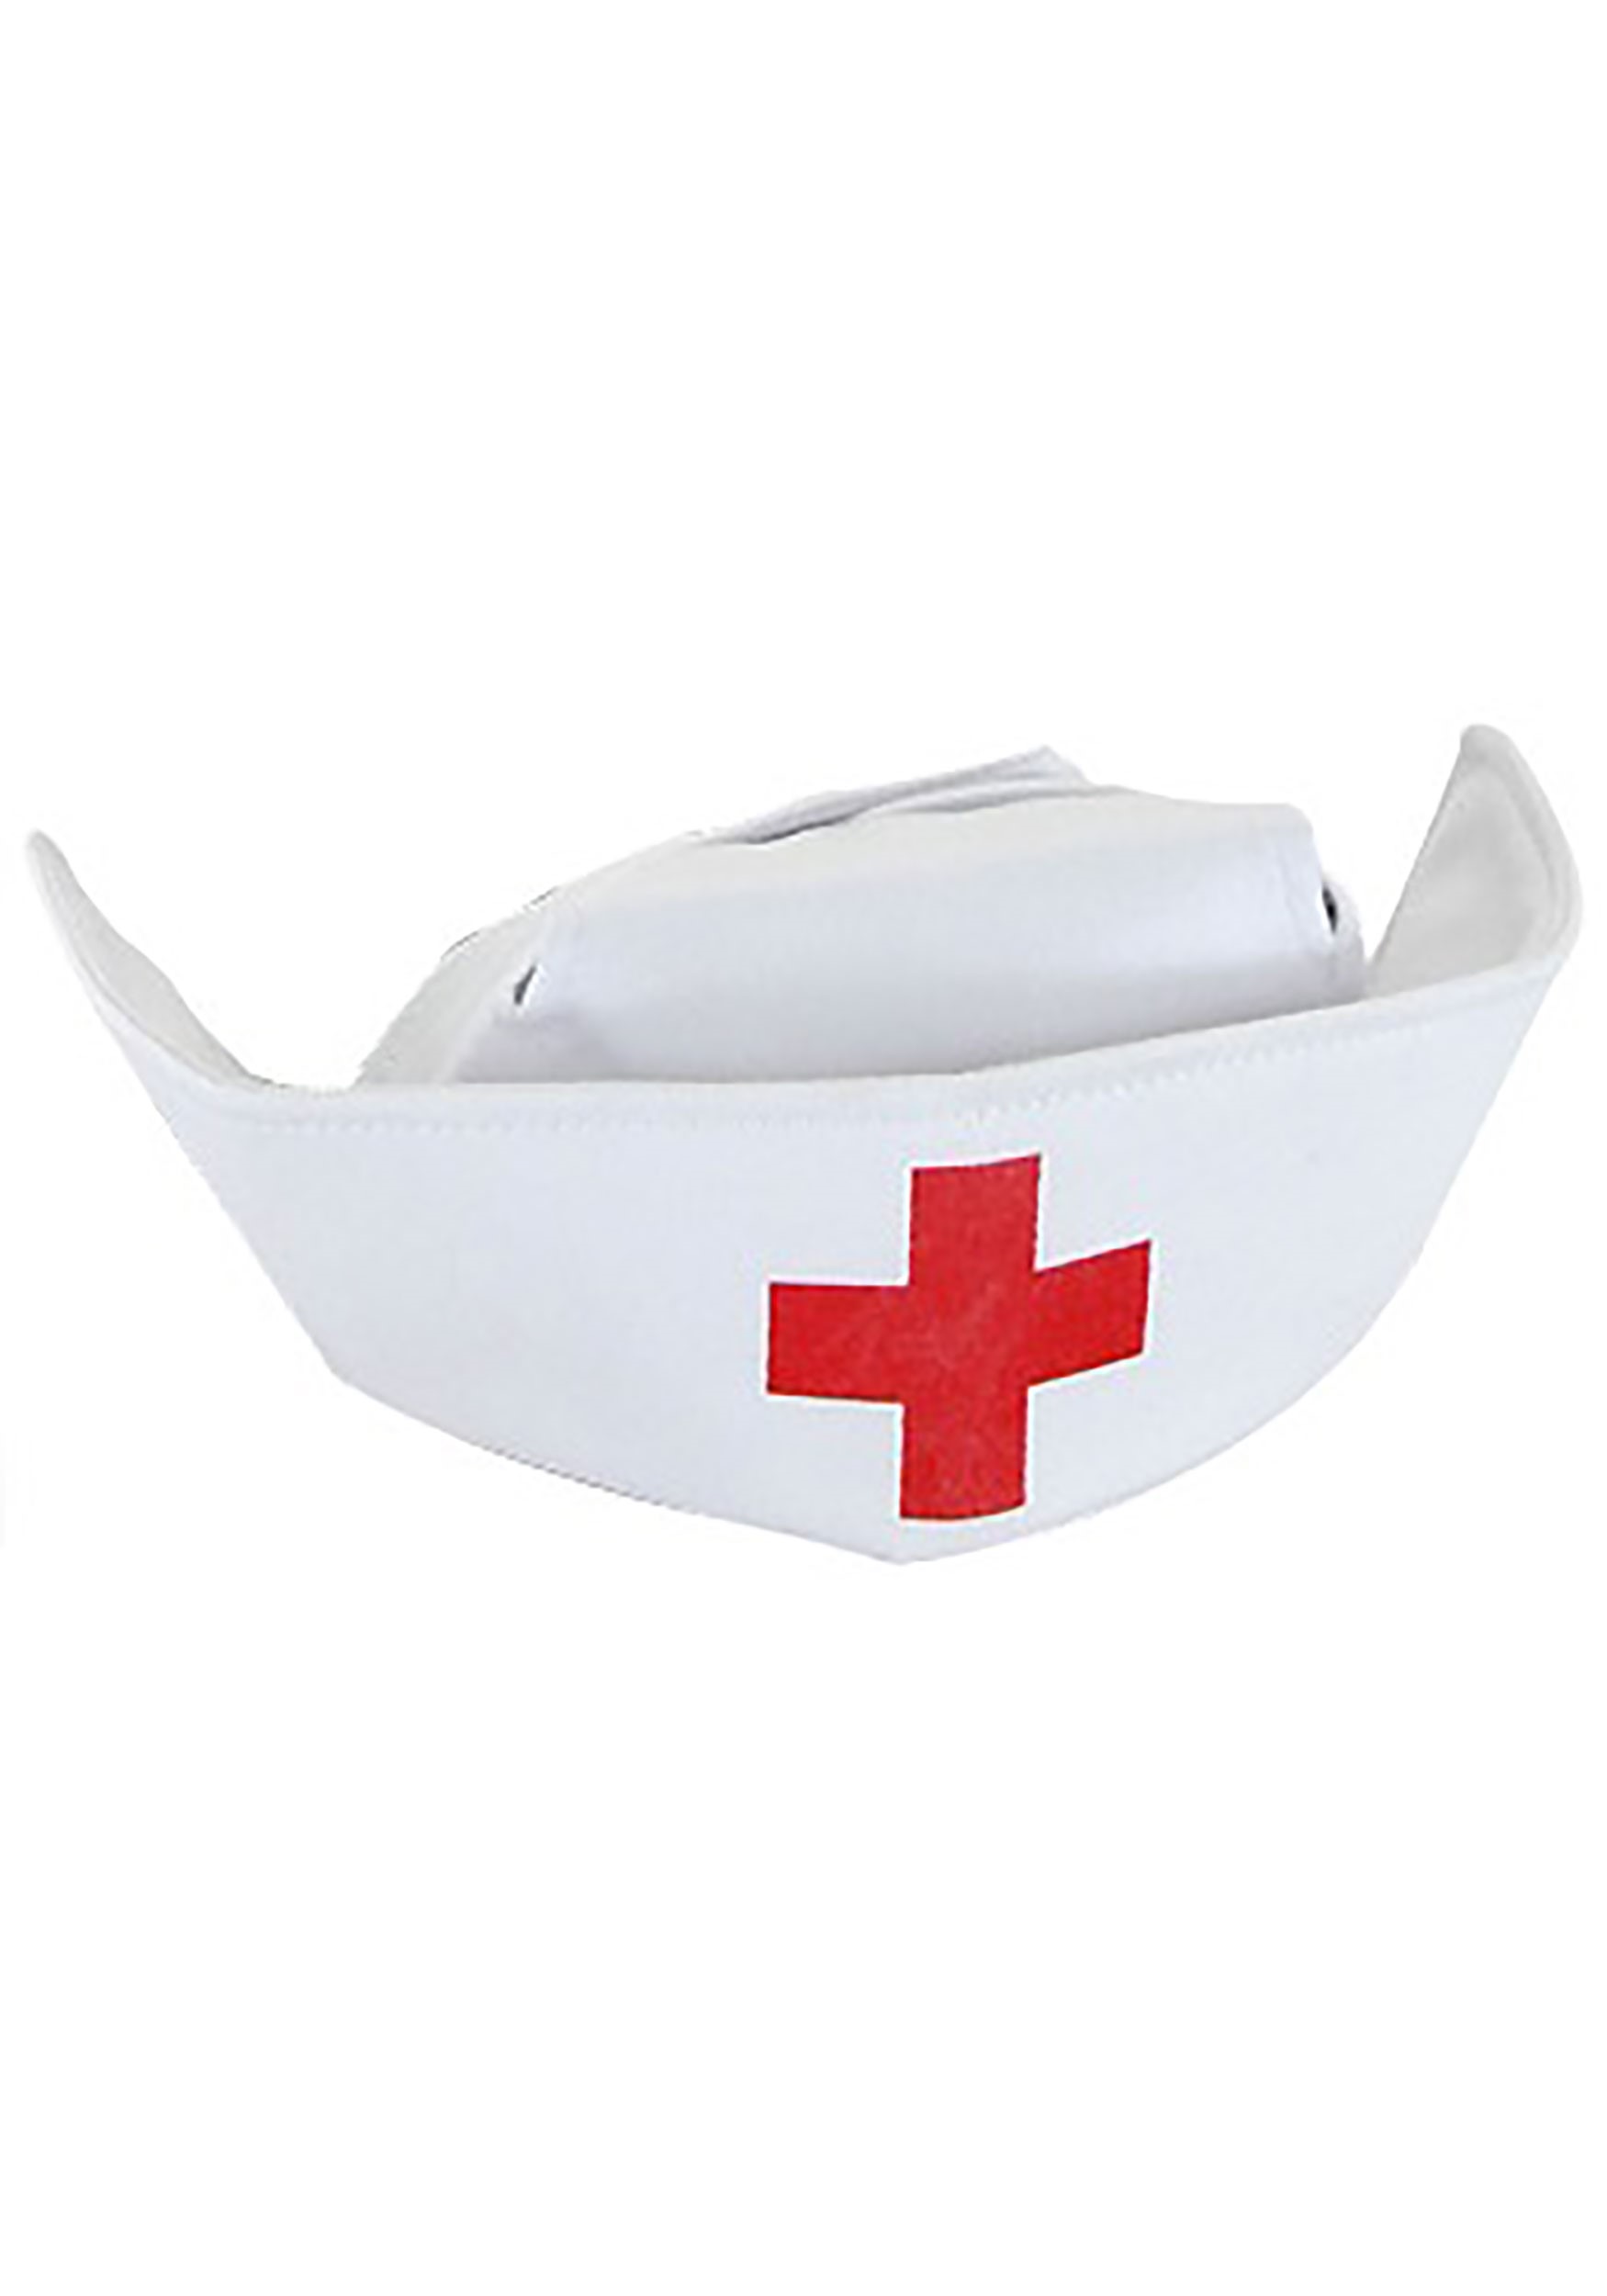 Women’s White Nurse Costume Cap